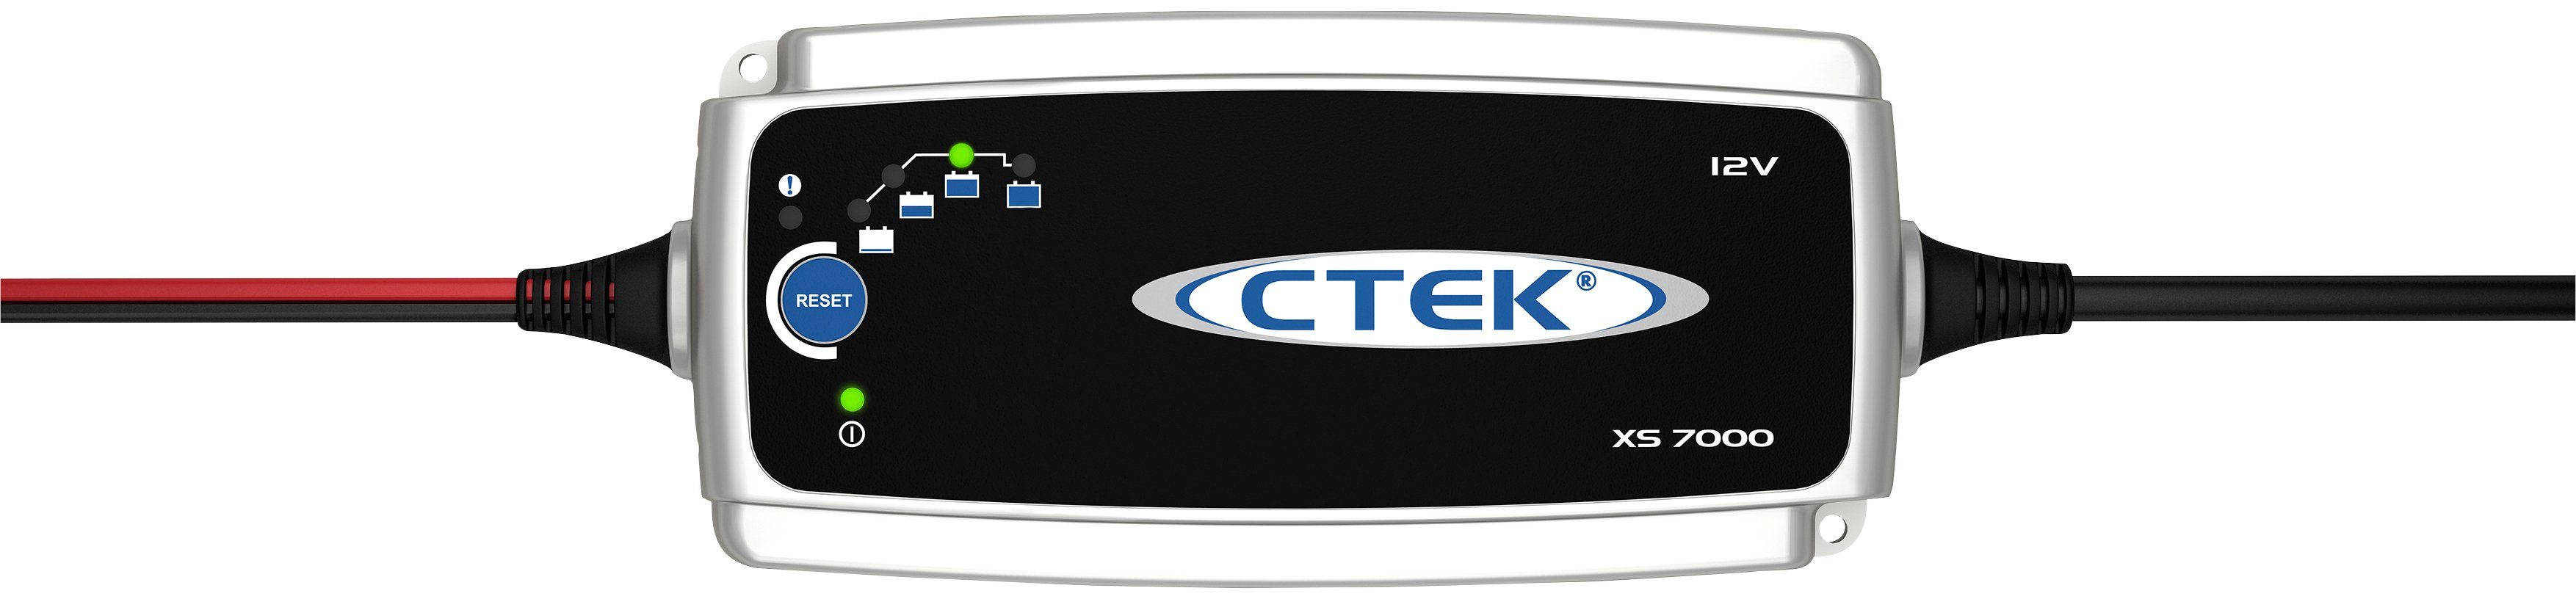 XS7000 Entsulfatierungsfunktion) (Patentierte Batterie-Ladegerät CTEK